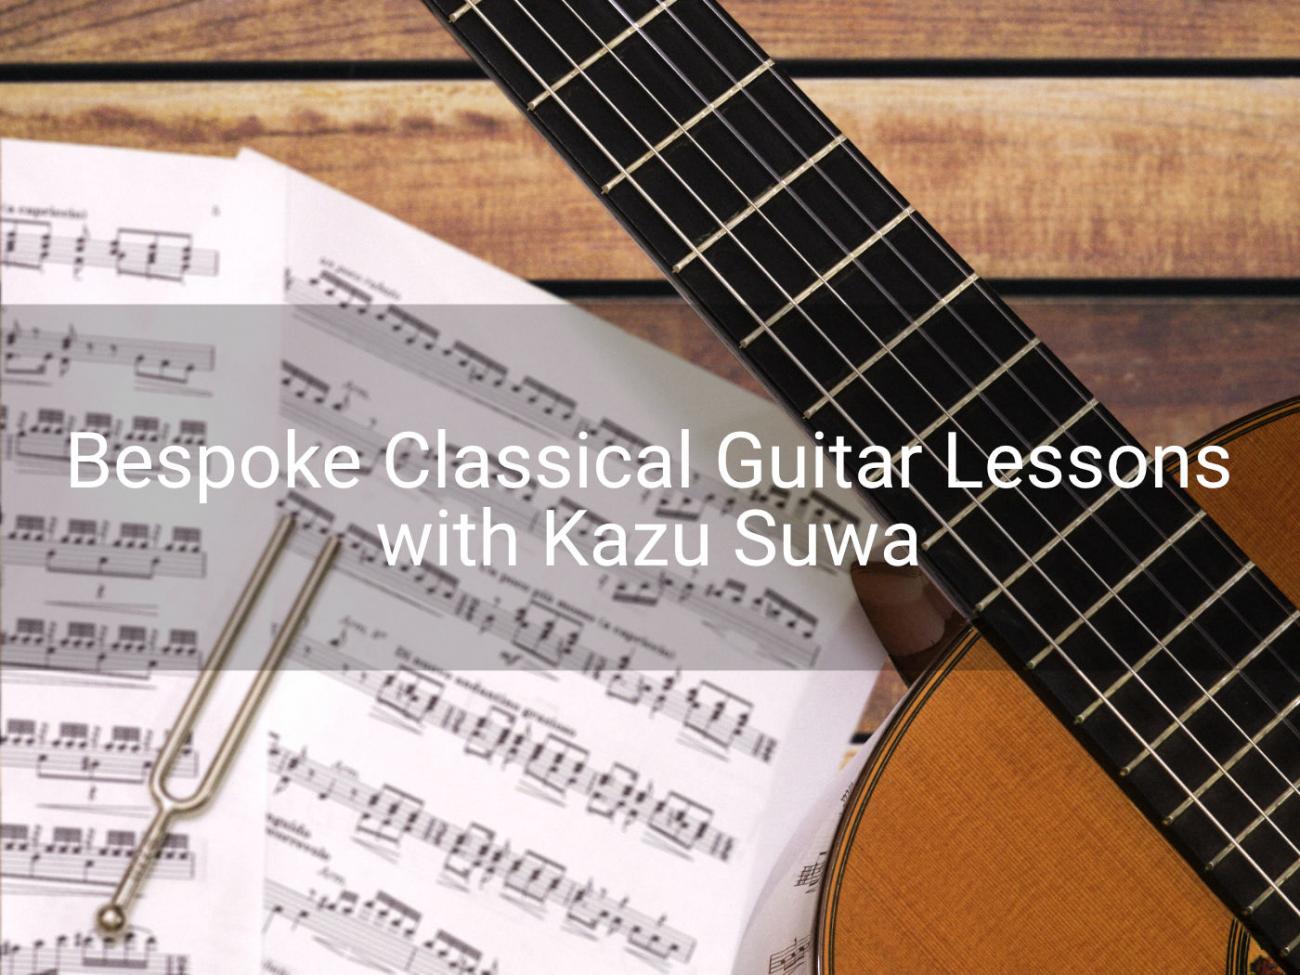 Bespoke Classical Guitar Lessons with Kazu Suwa